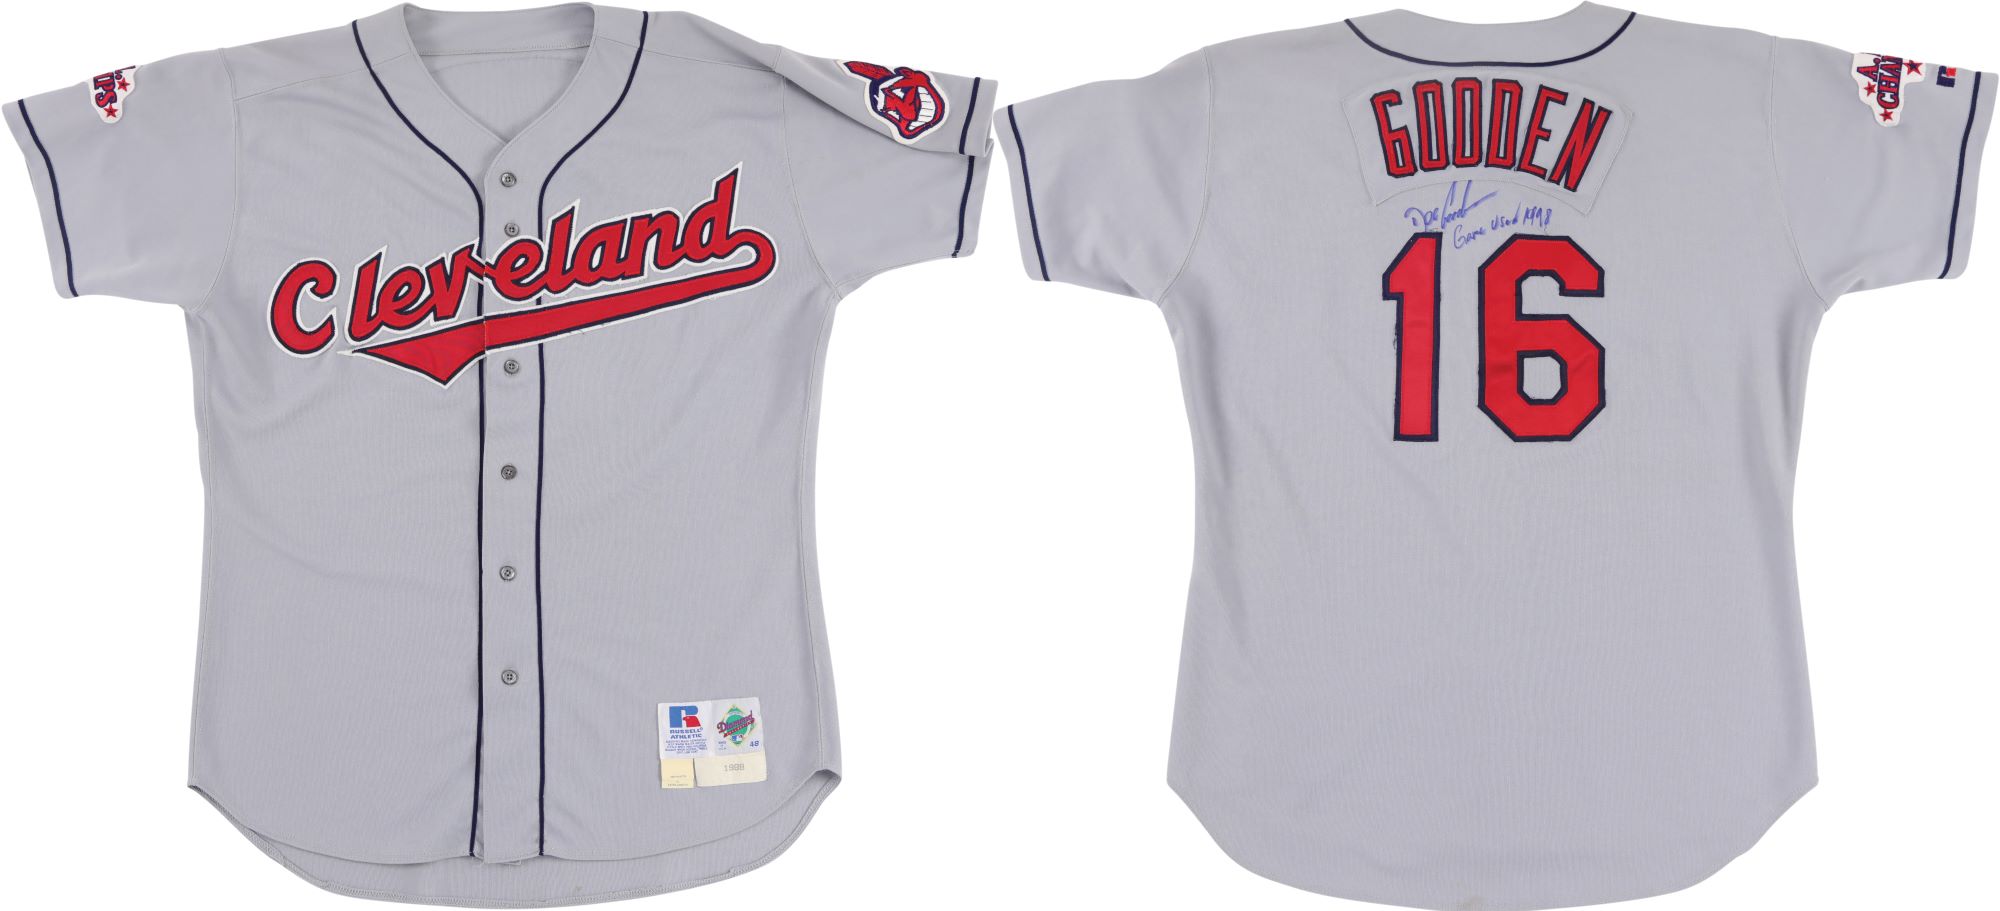 12 Cleveland nostalgic sports items up for auction (photos) 